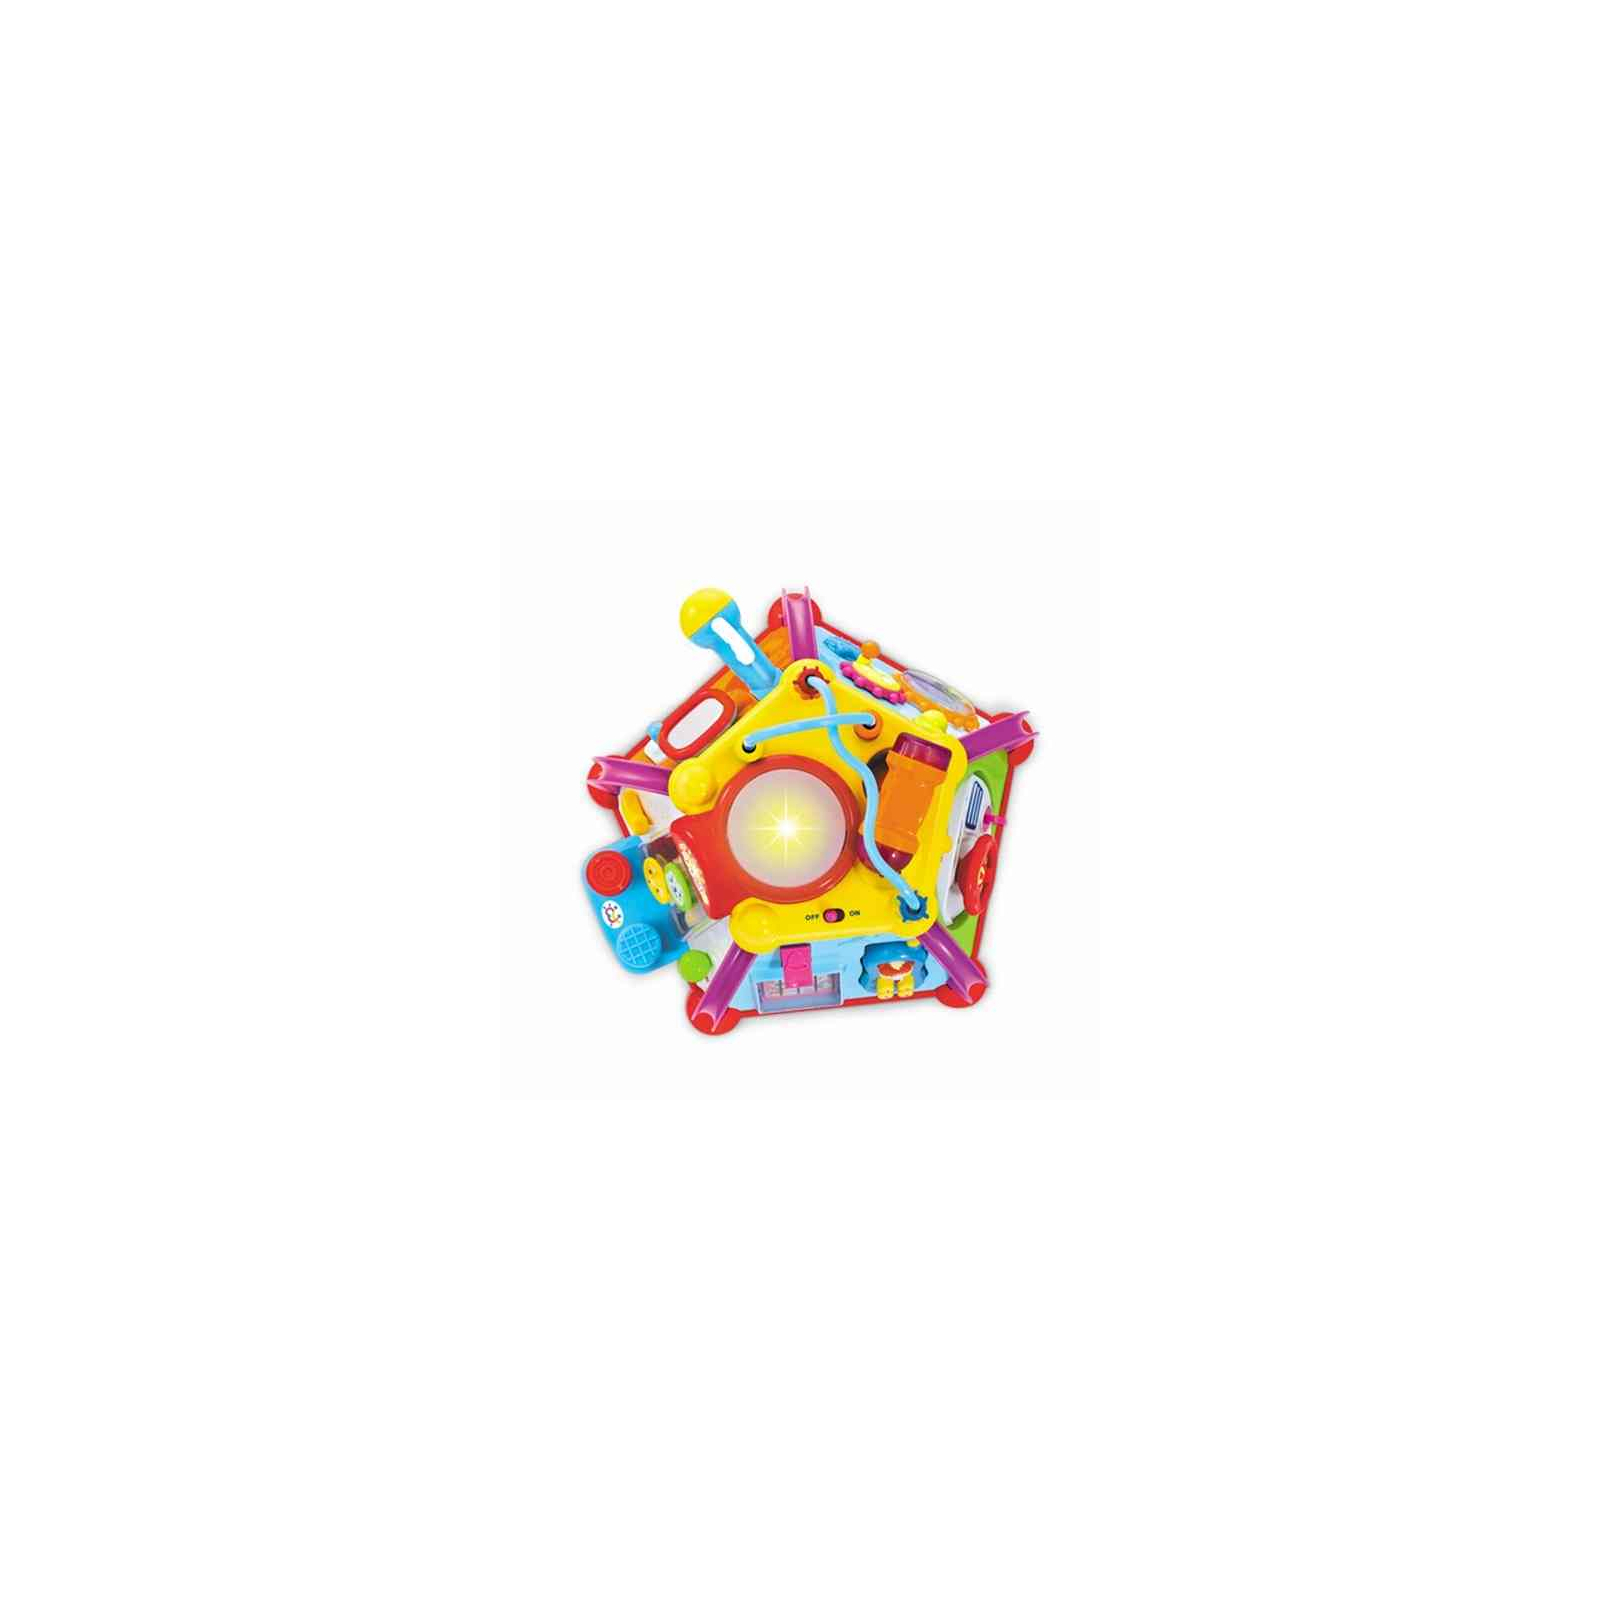 Розвиваюча іграшка Huile Toys Маленькая вселенная (806) зображення 4